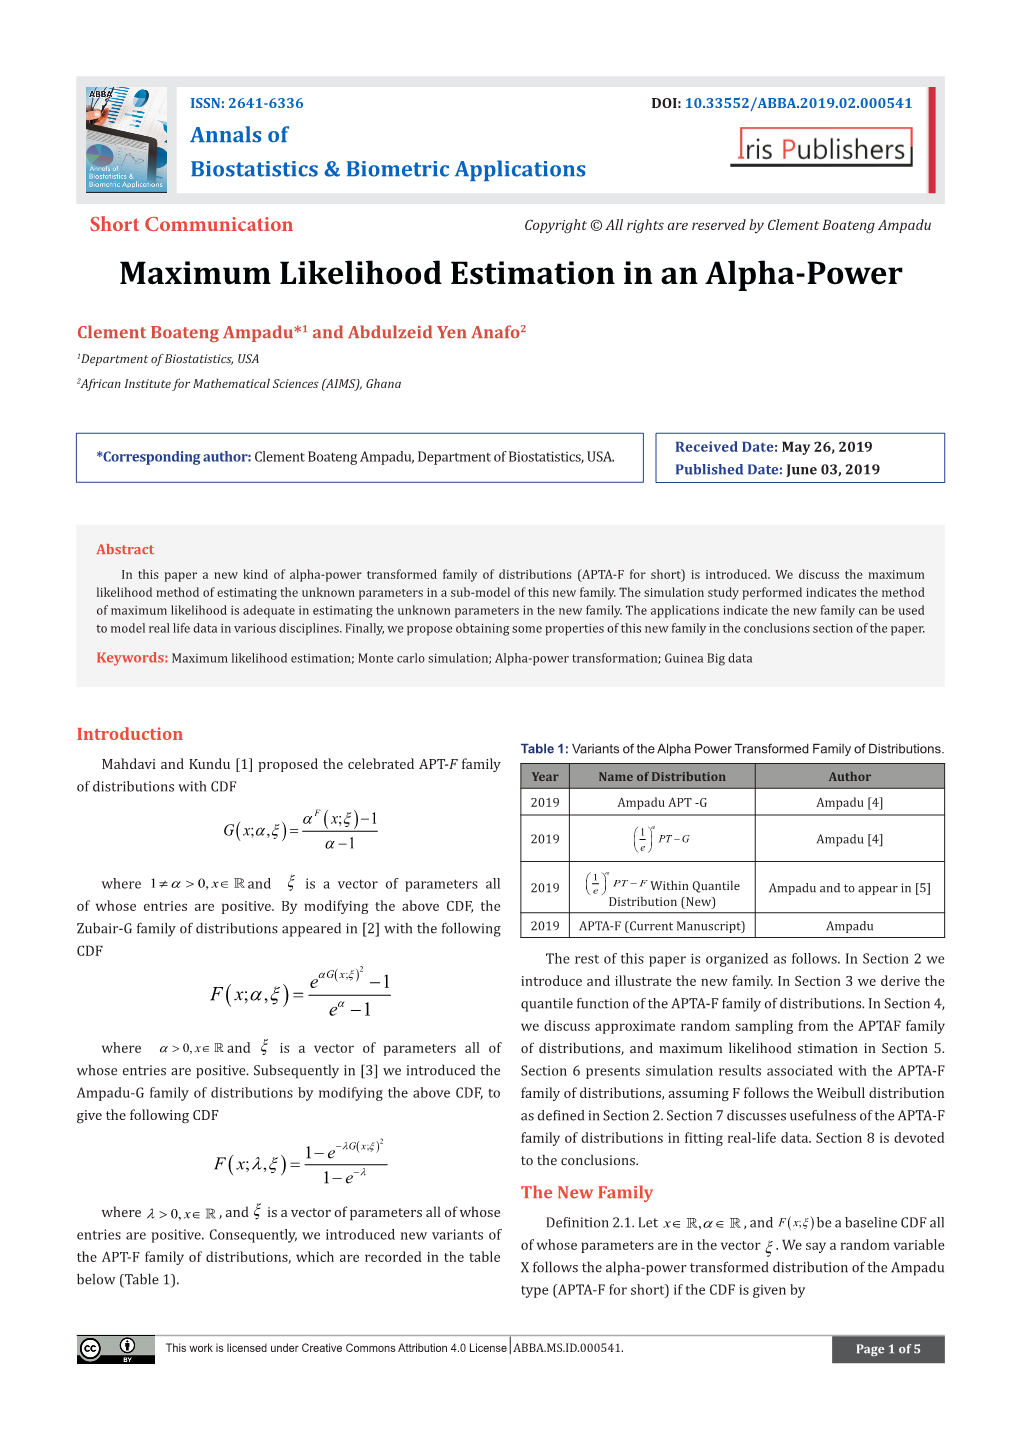 Maximum Likelihood Estimation in an Alpha-Power